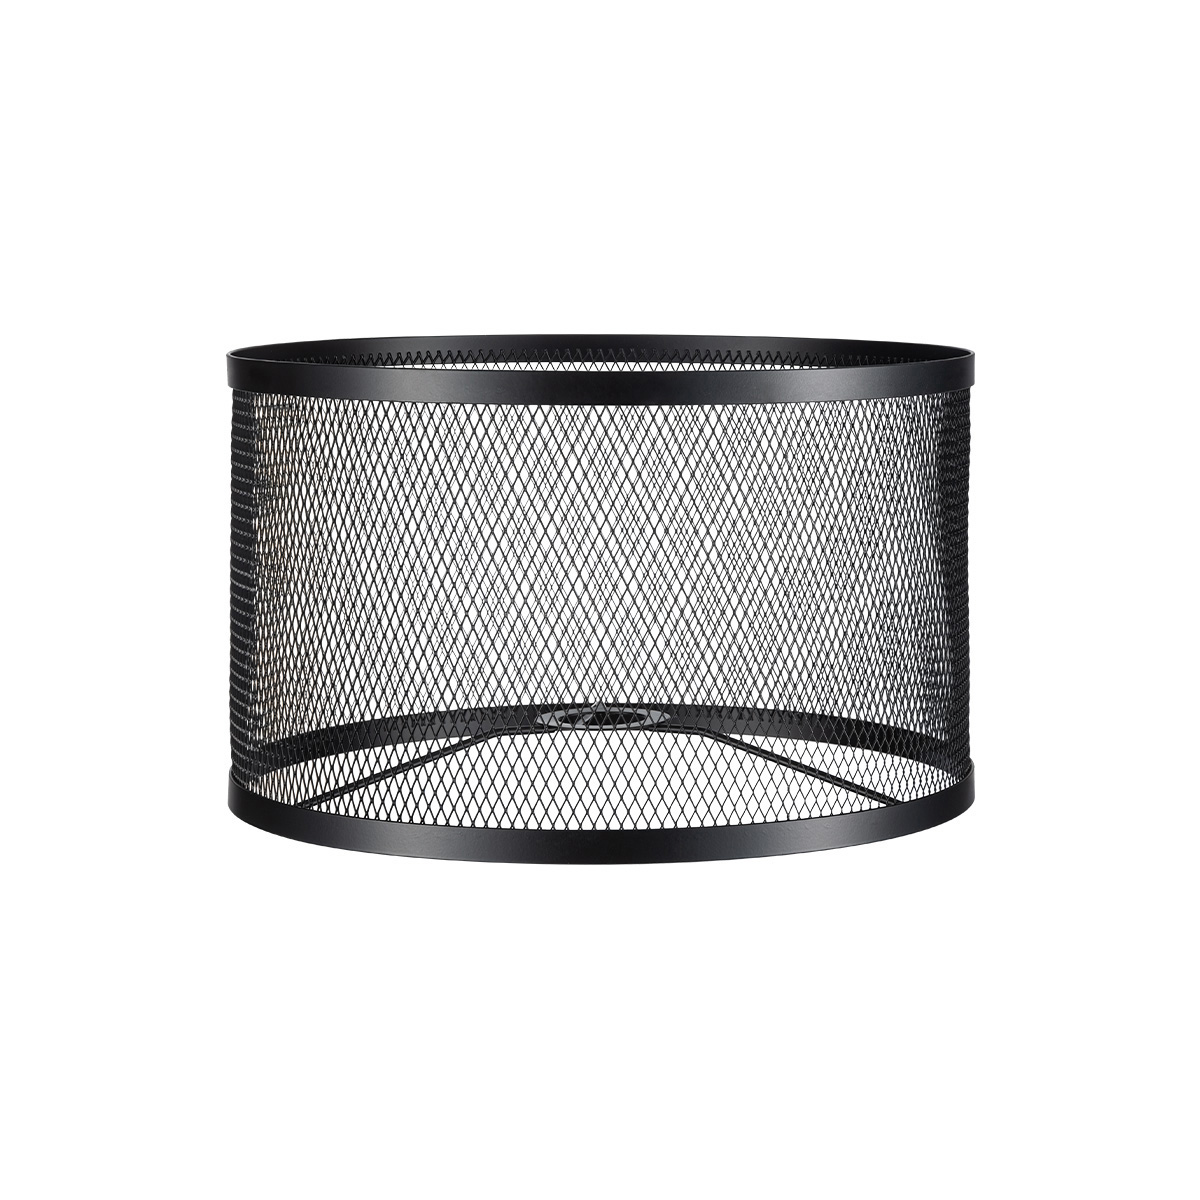 Tangla lighting - TLS7646-35BK - Decorative Lampshade - metal wire mesh in black - industrial black - Φ35cm - E27